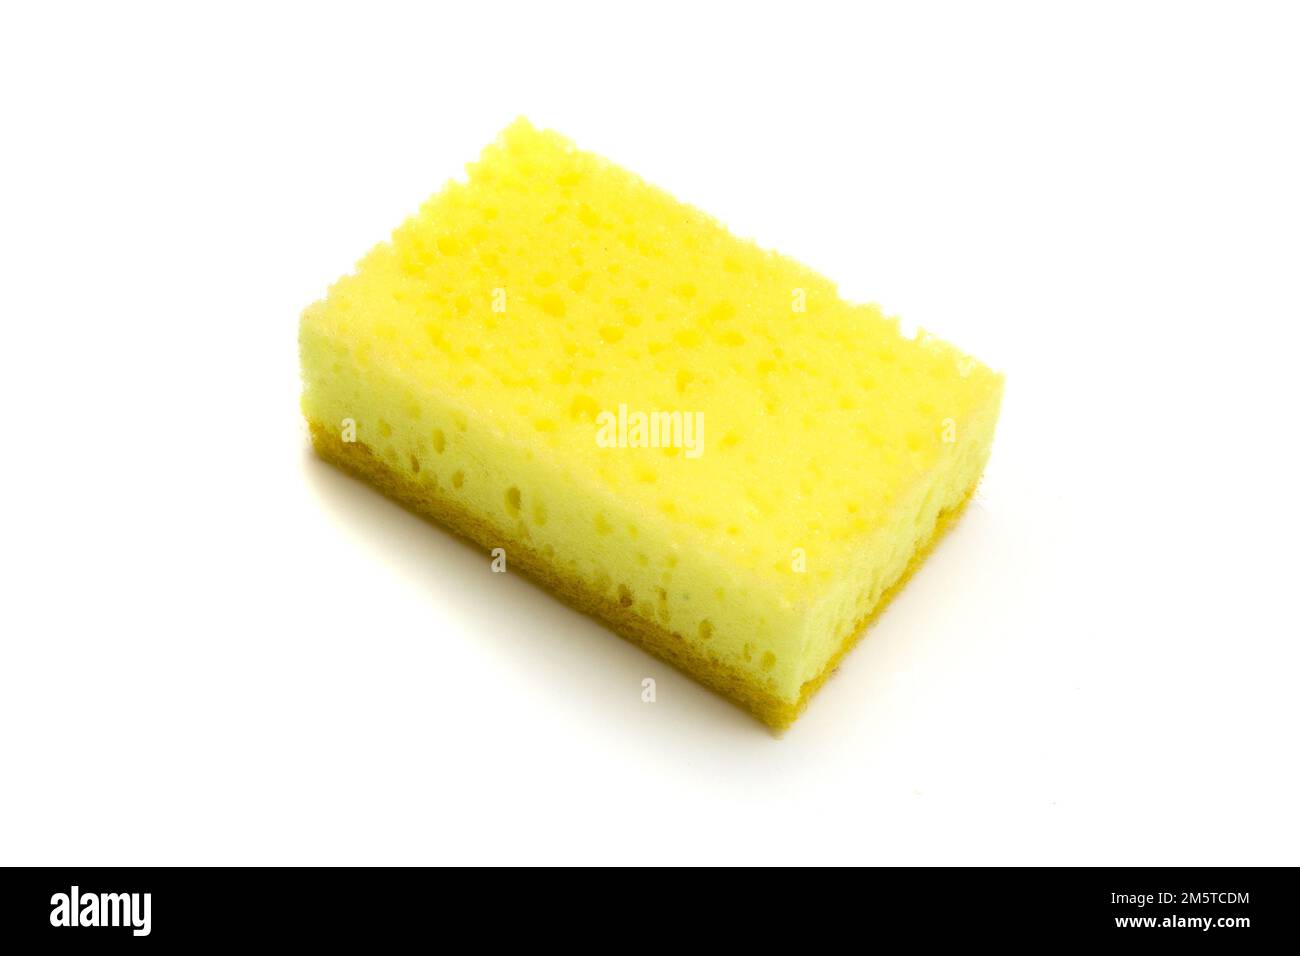 https://c8.alamy.com/comp/2M5TCDM/single-yellow-kitchen-sponge-isolated-on-white-background-closeup-top-view-2M5TCDM.jpg